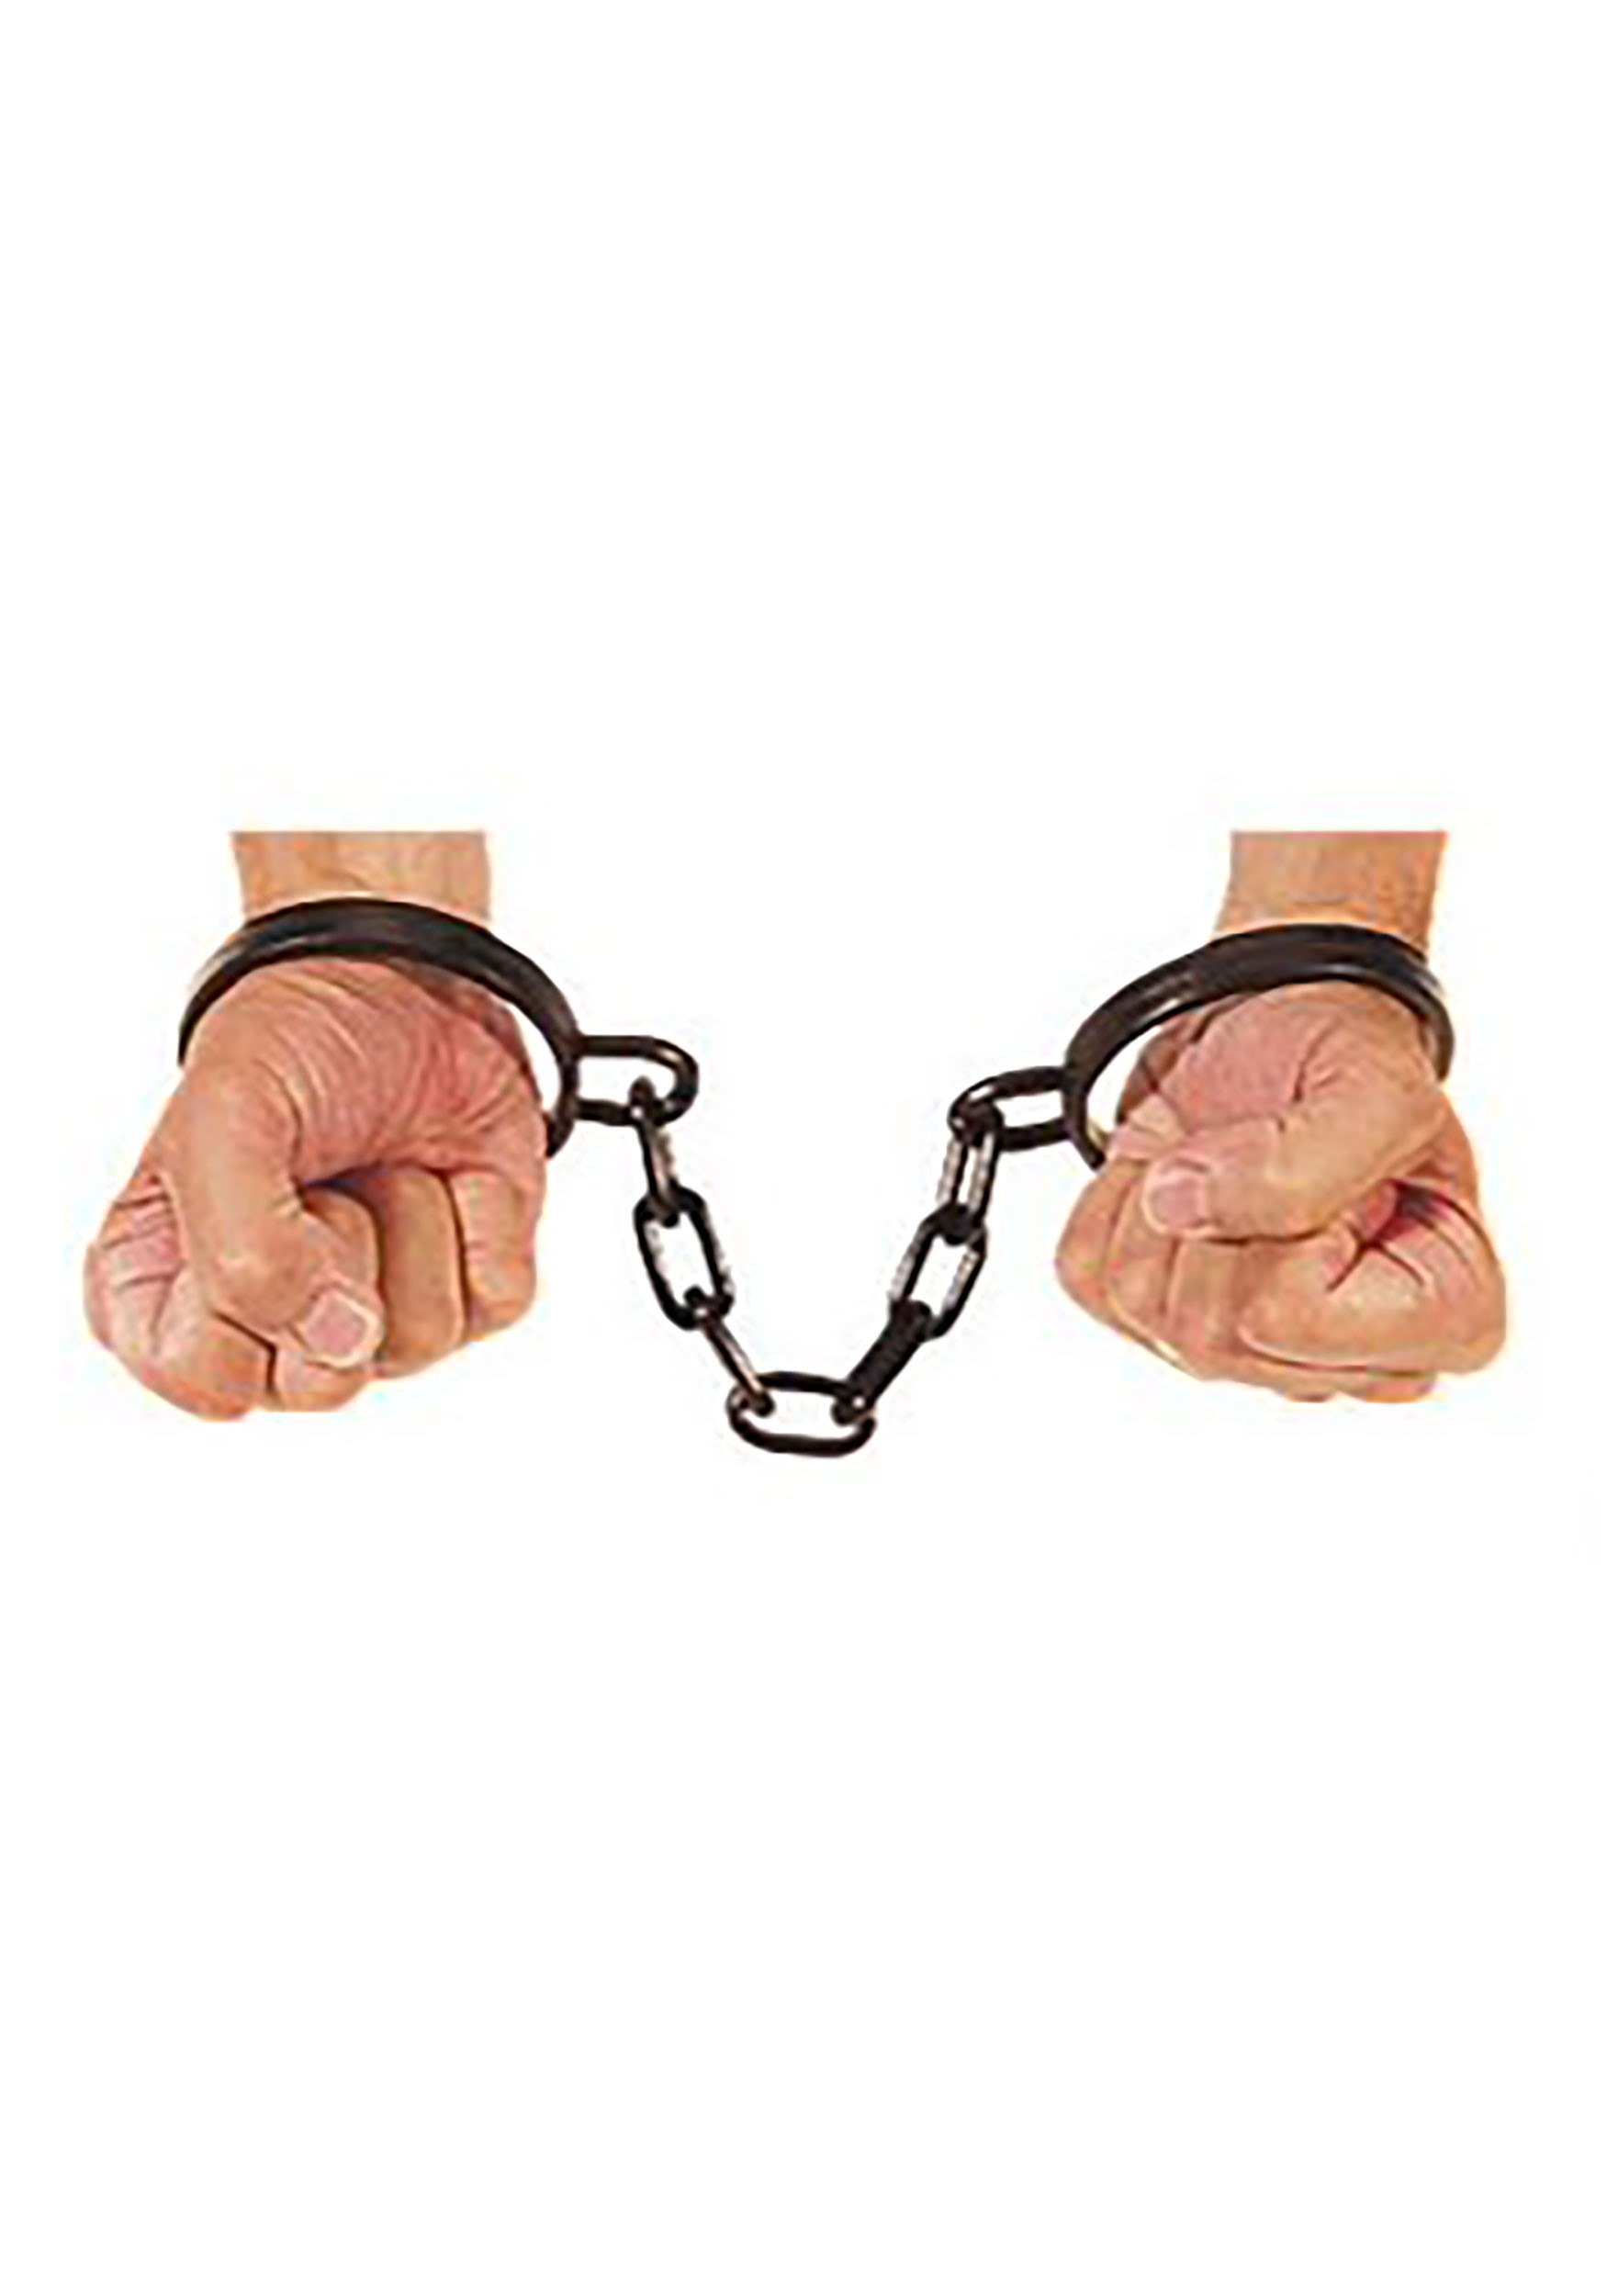 Wrist Shackles for Prisoner